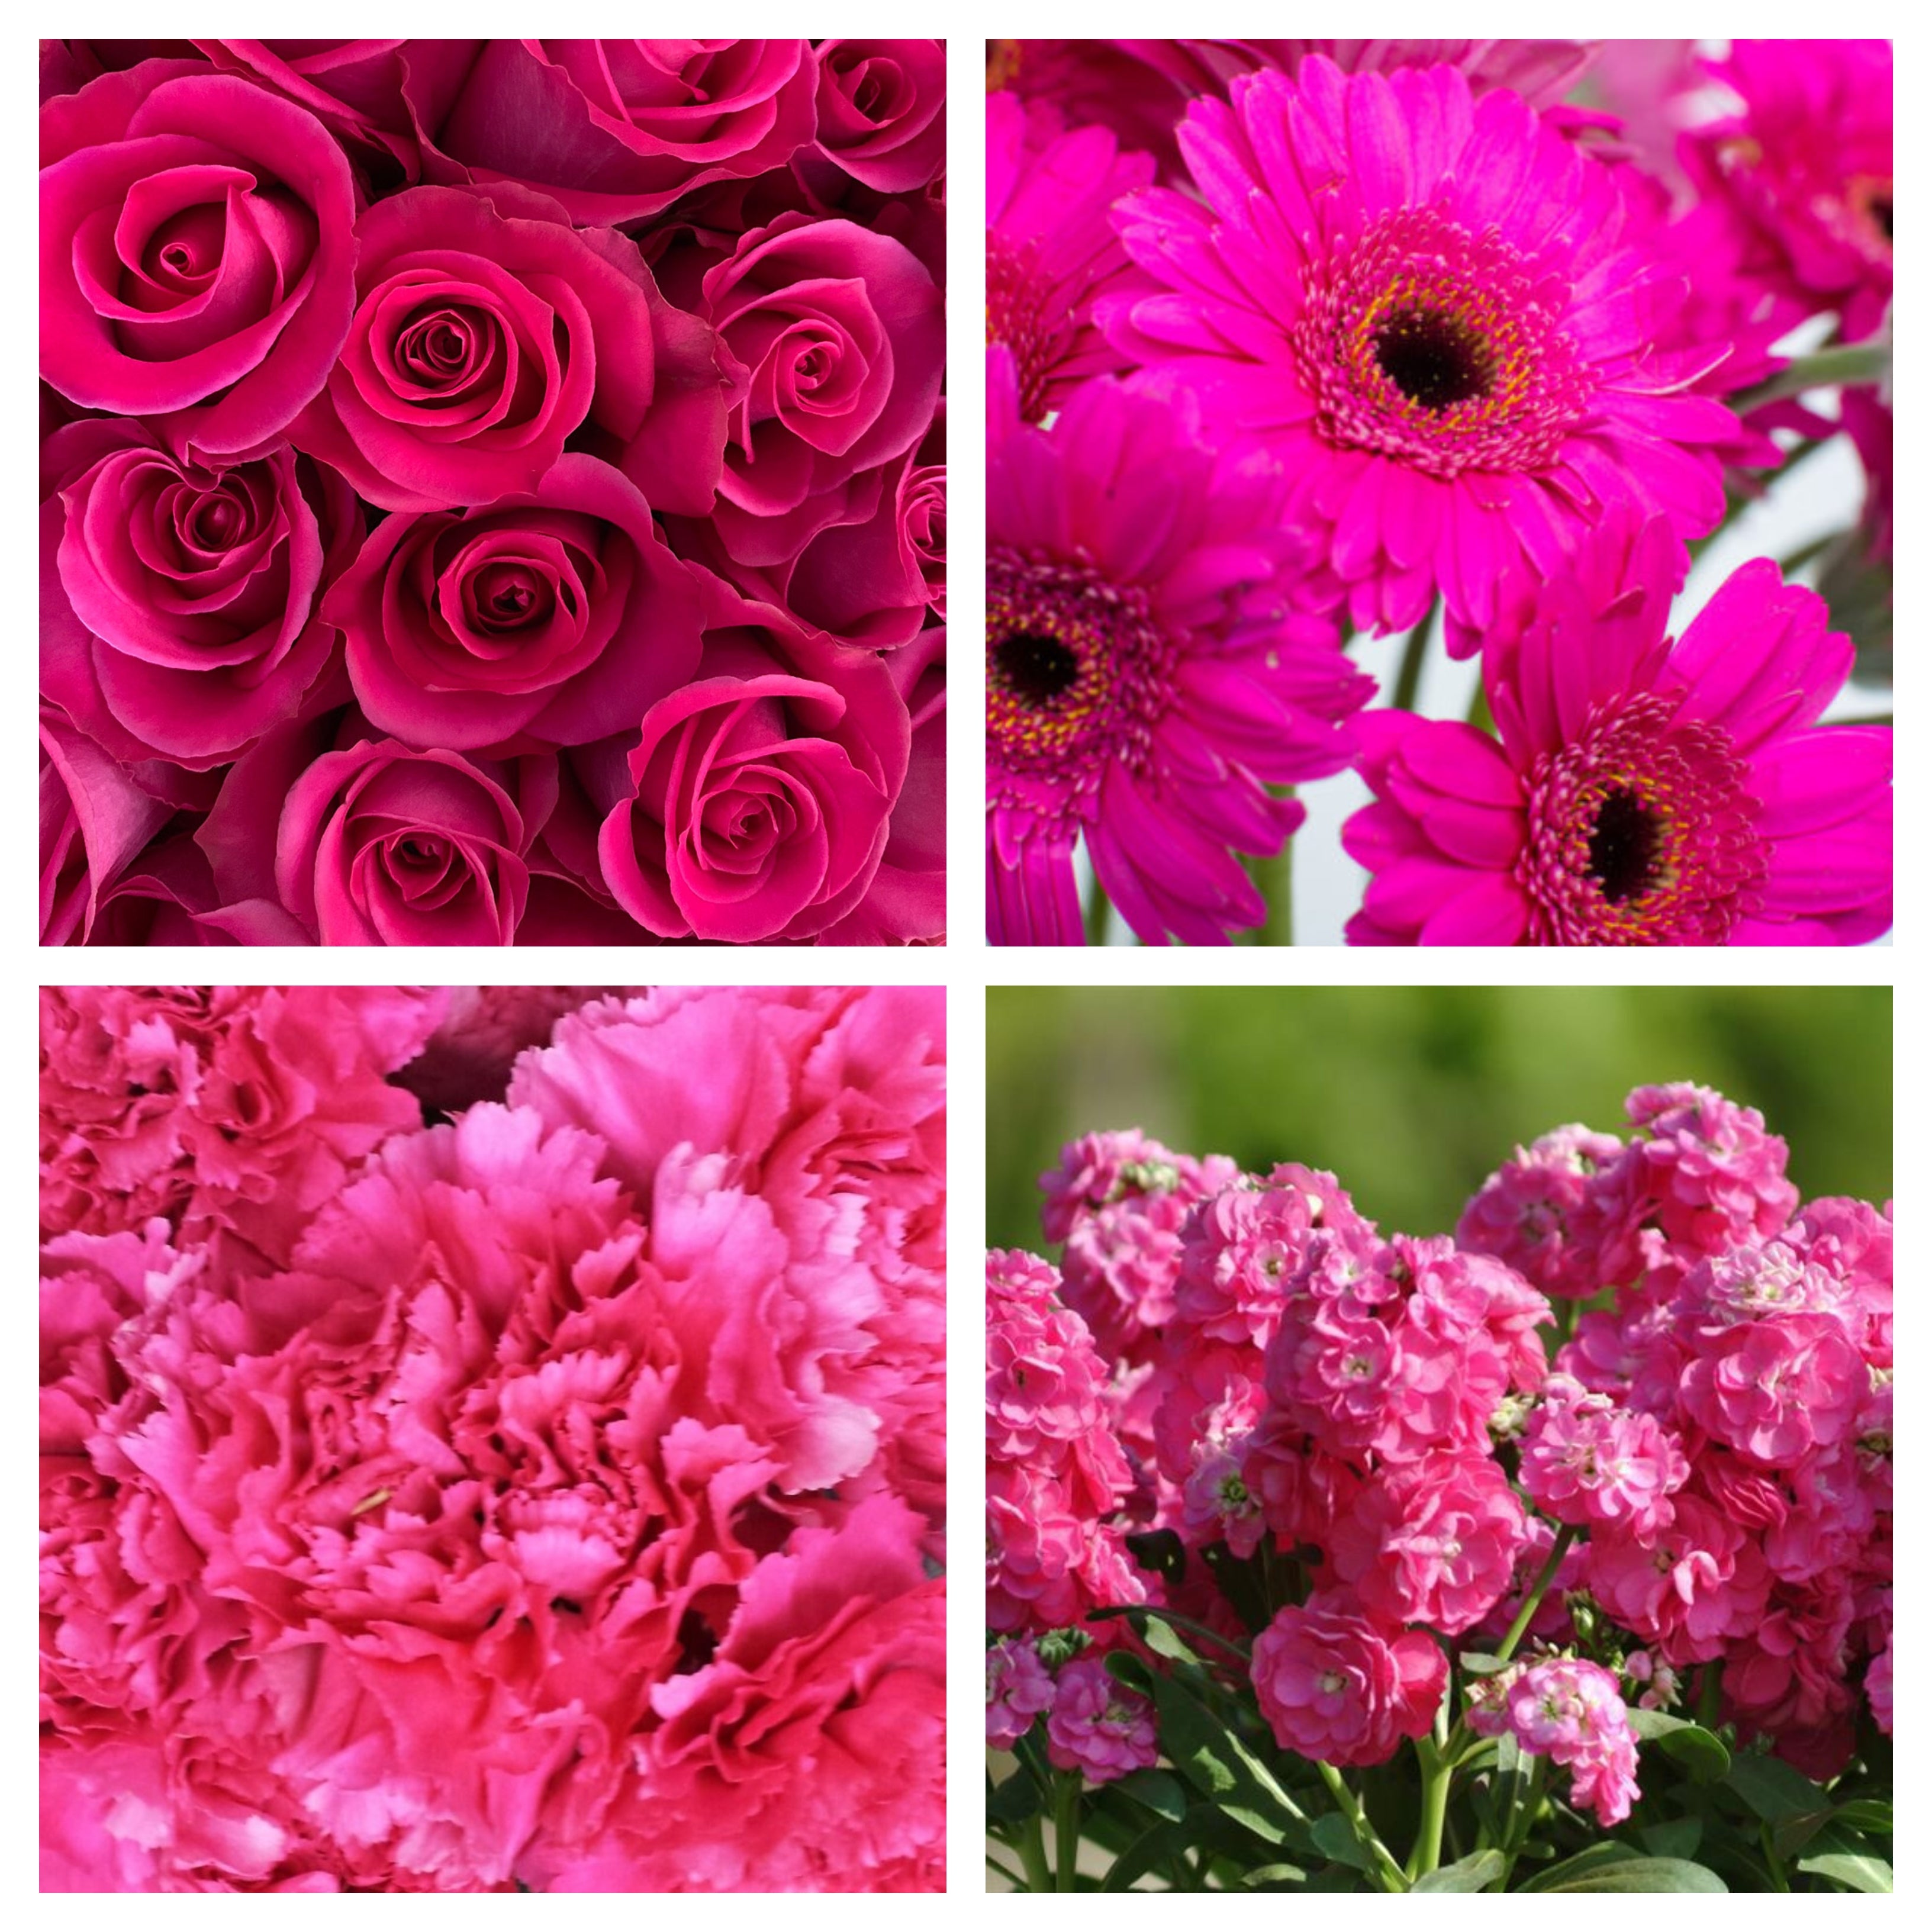 Carnation - Hot Pink